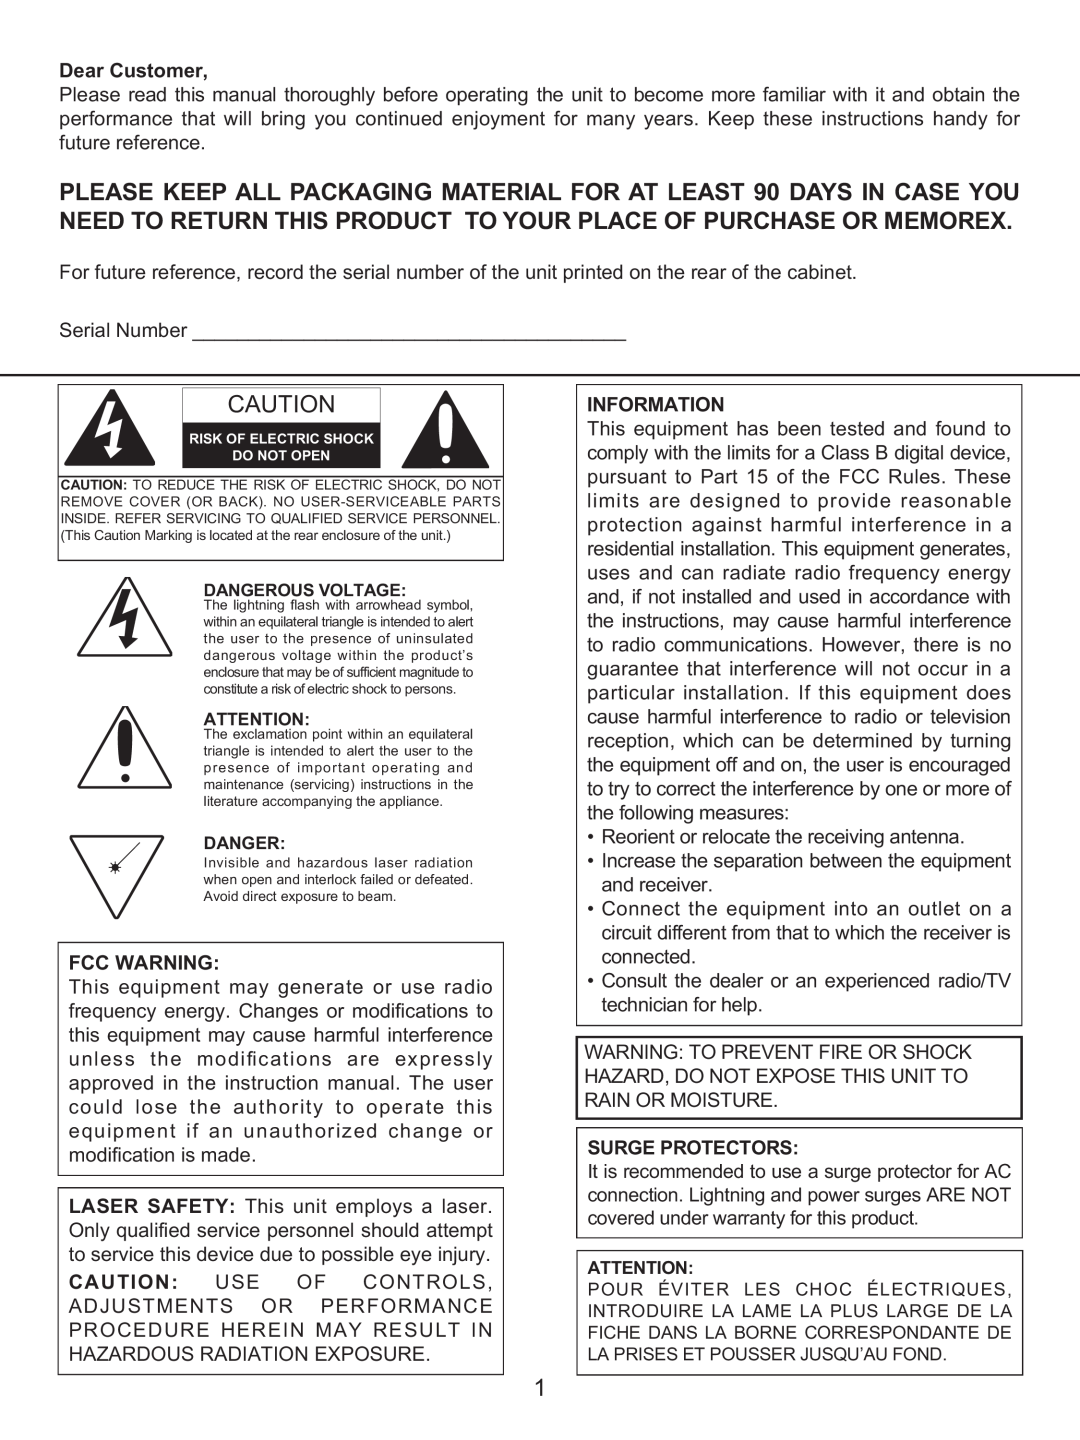 Memorex MKS2422 manual Fcc Warning, Information, Surge Protectors 